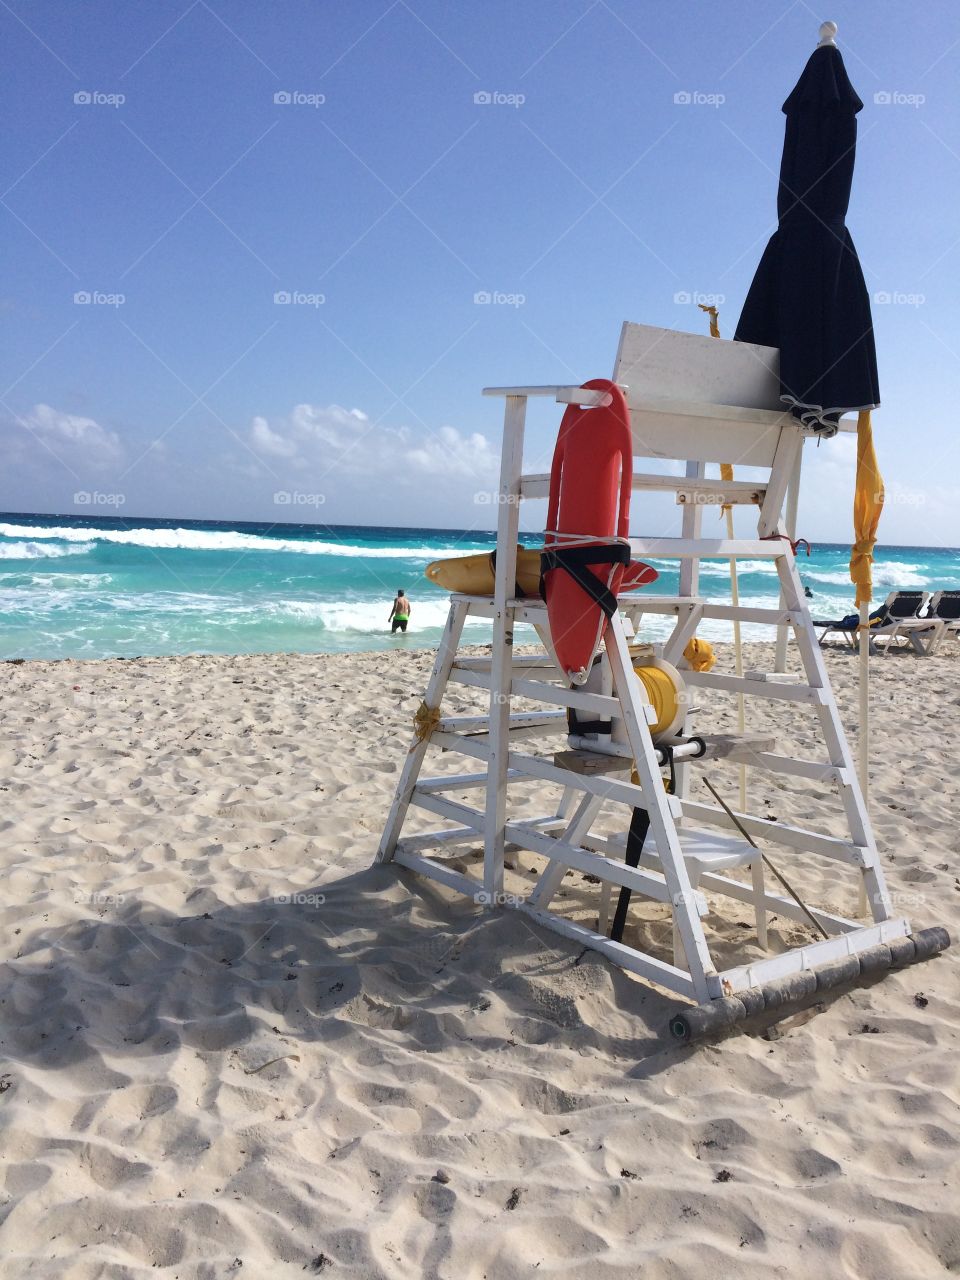 Lifeguard chair in cancun, Mexico